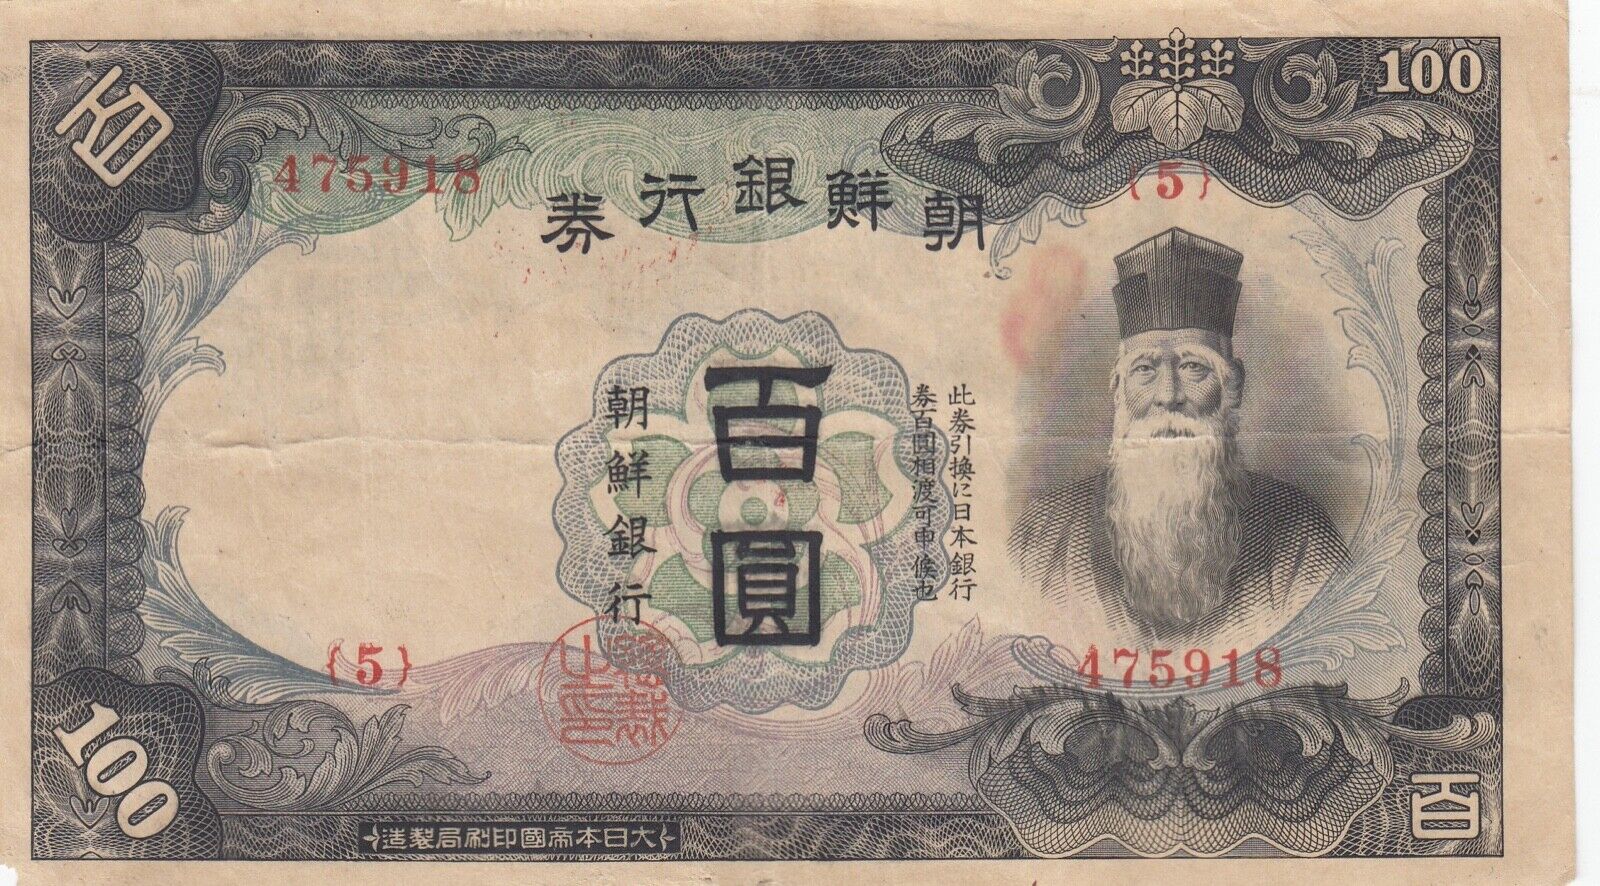 Korea Bank Of Chosen Japanese Empire Banknote 100 Yen (1944) B417  P-37 Vf